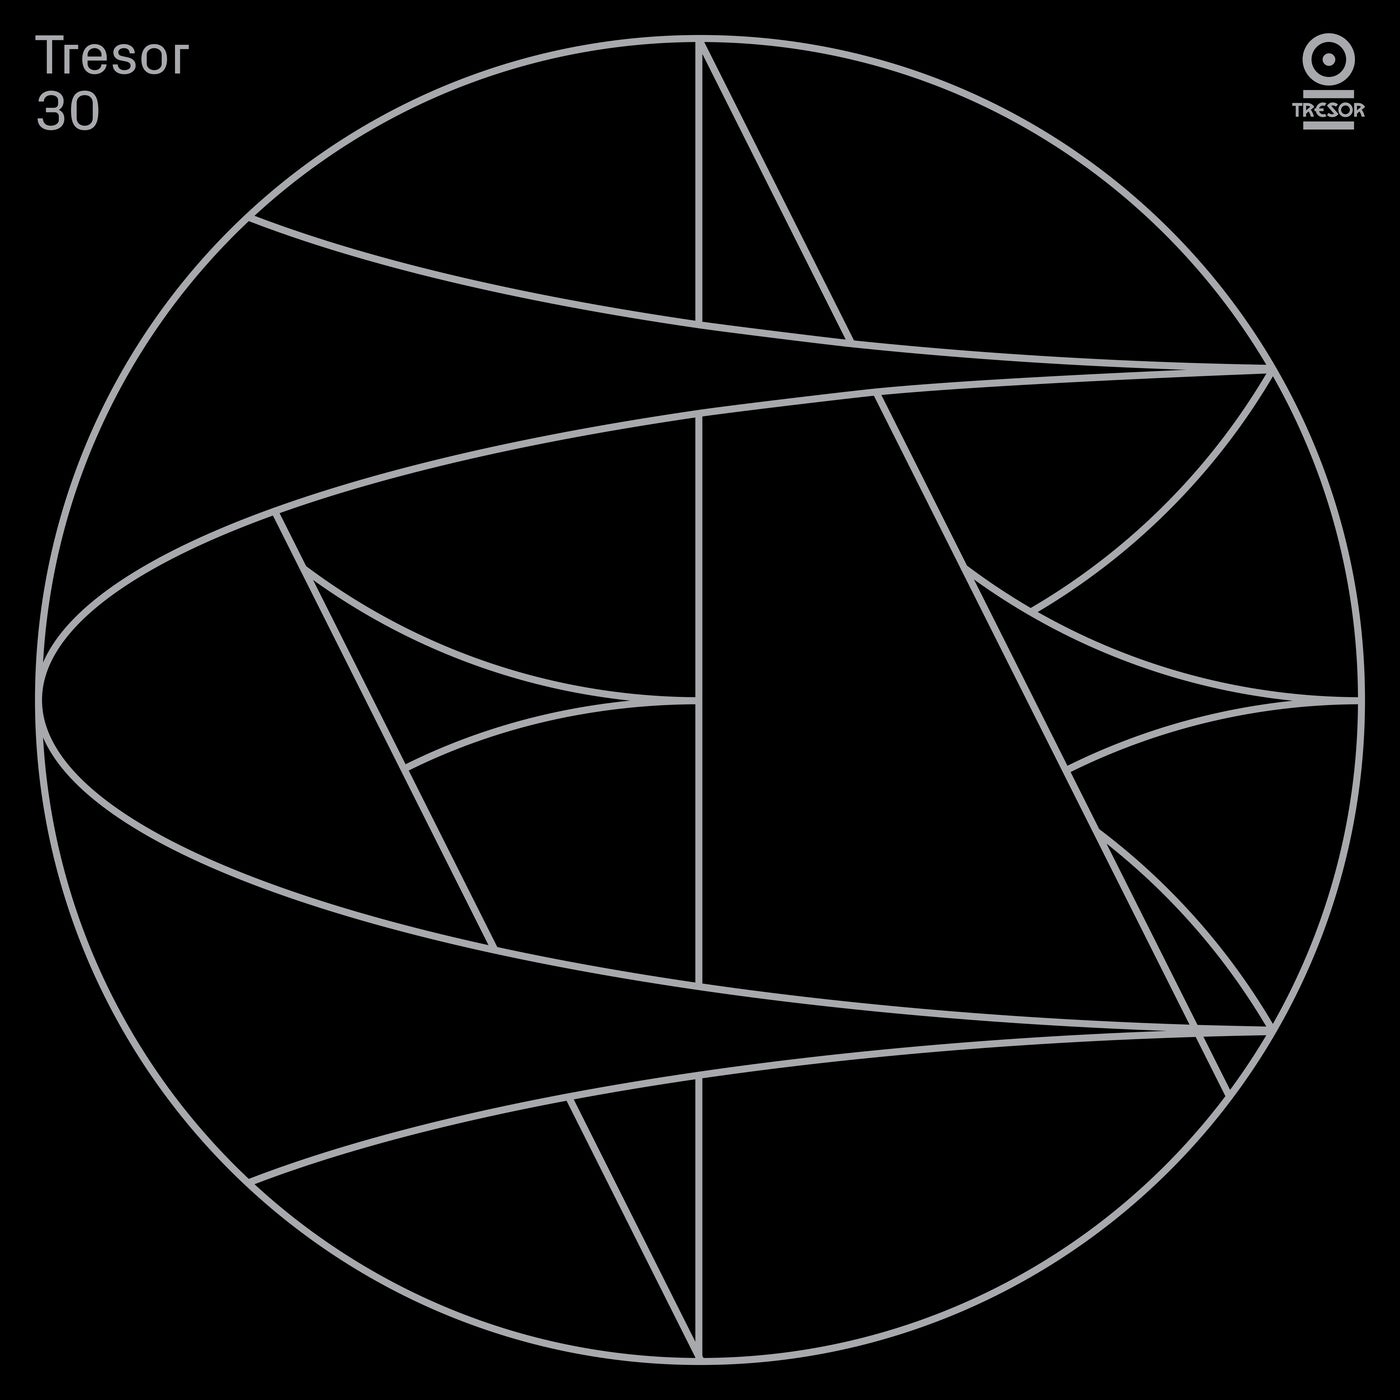 Download Tresor 30 on Electrobuzz